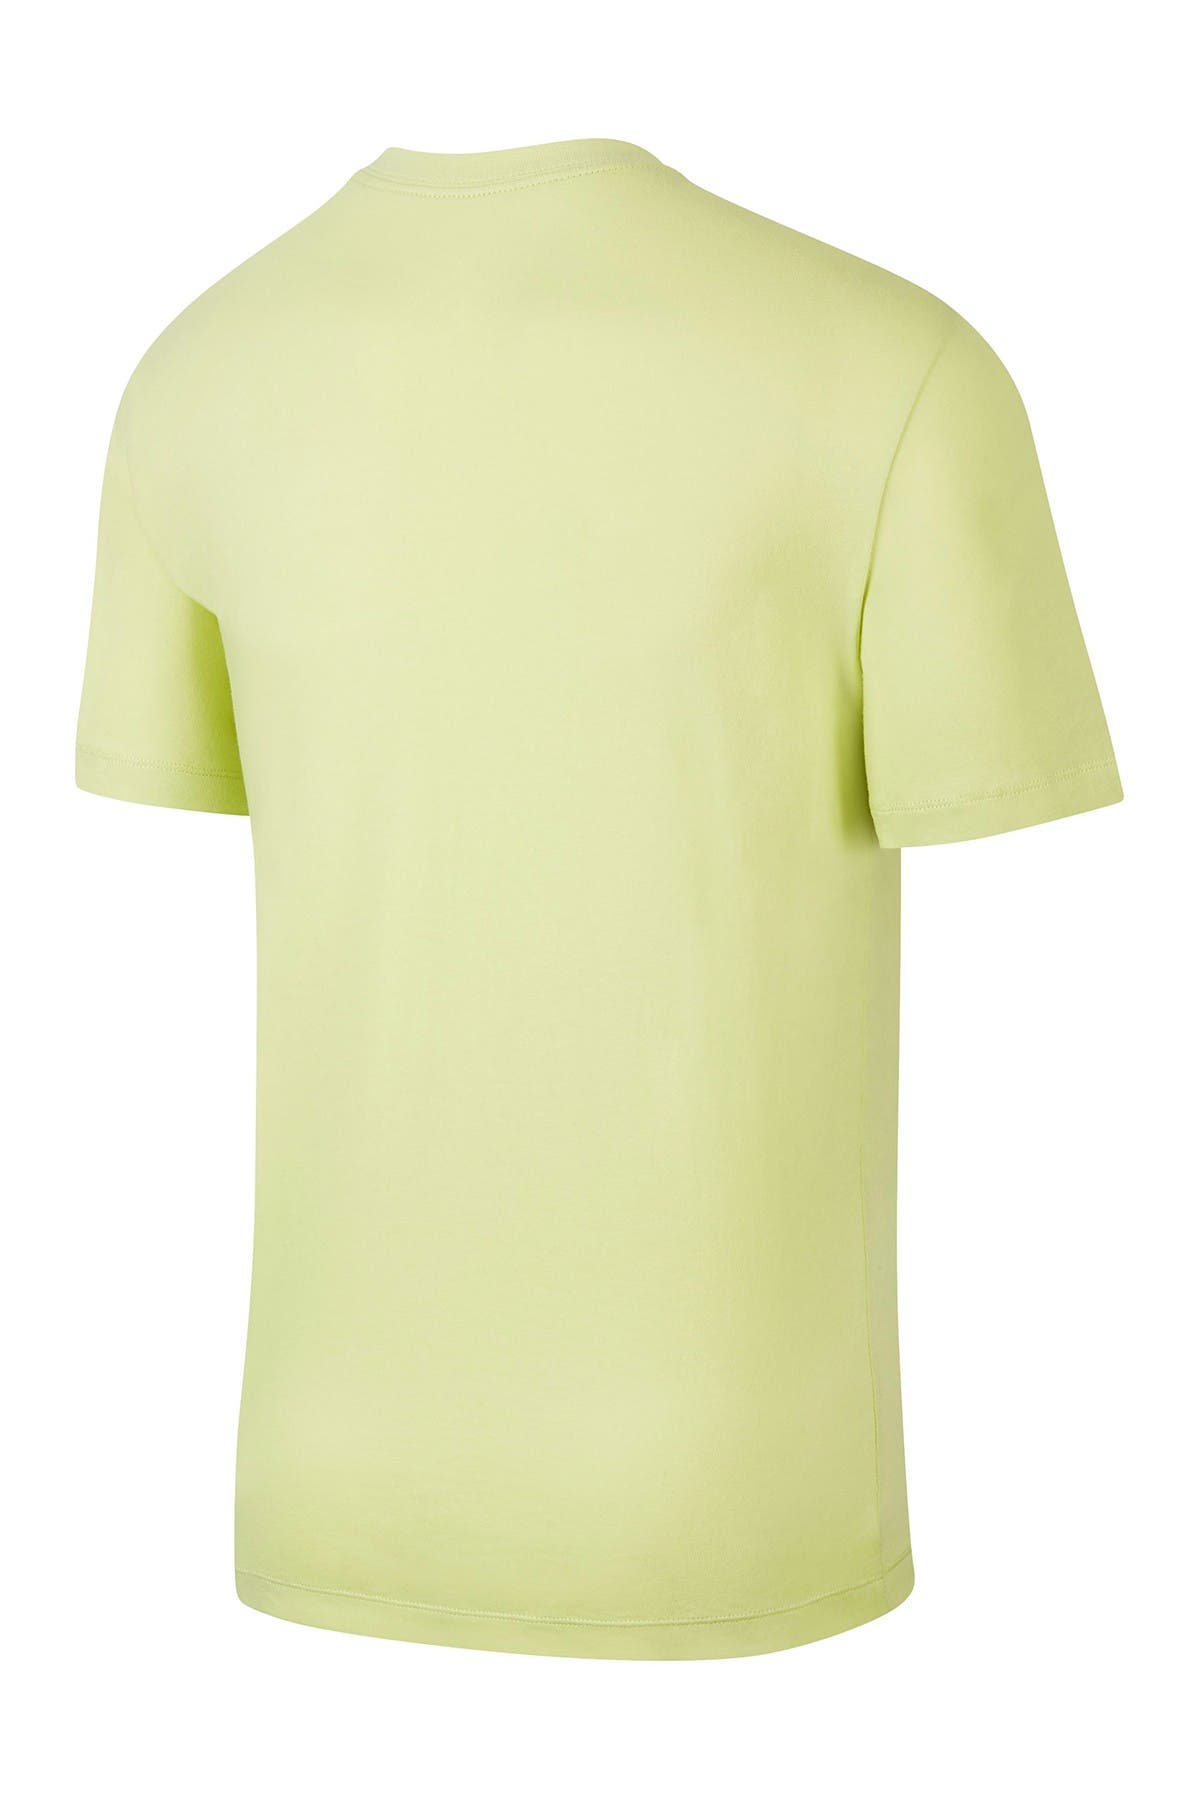 Nike | Swoosh Logo T-Shirt | Nordstrom Rack